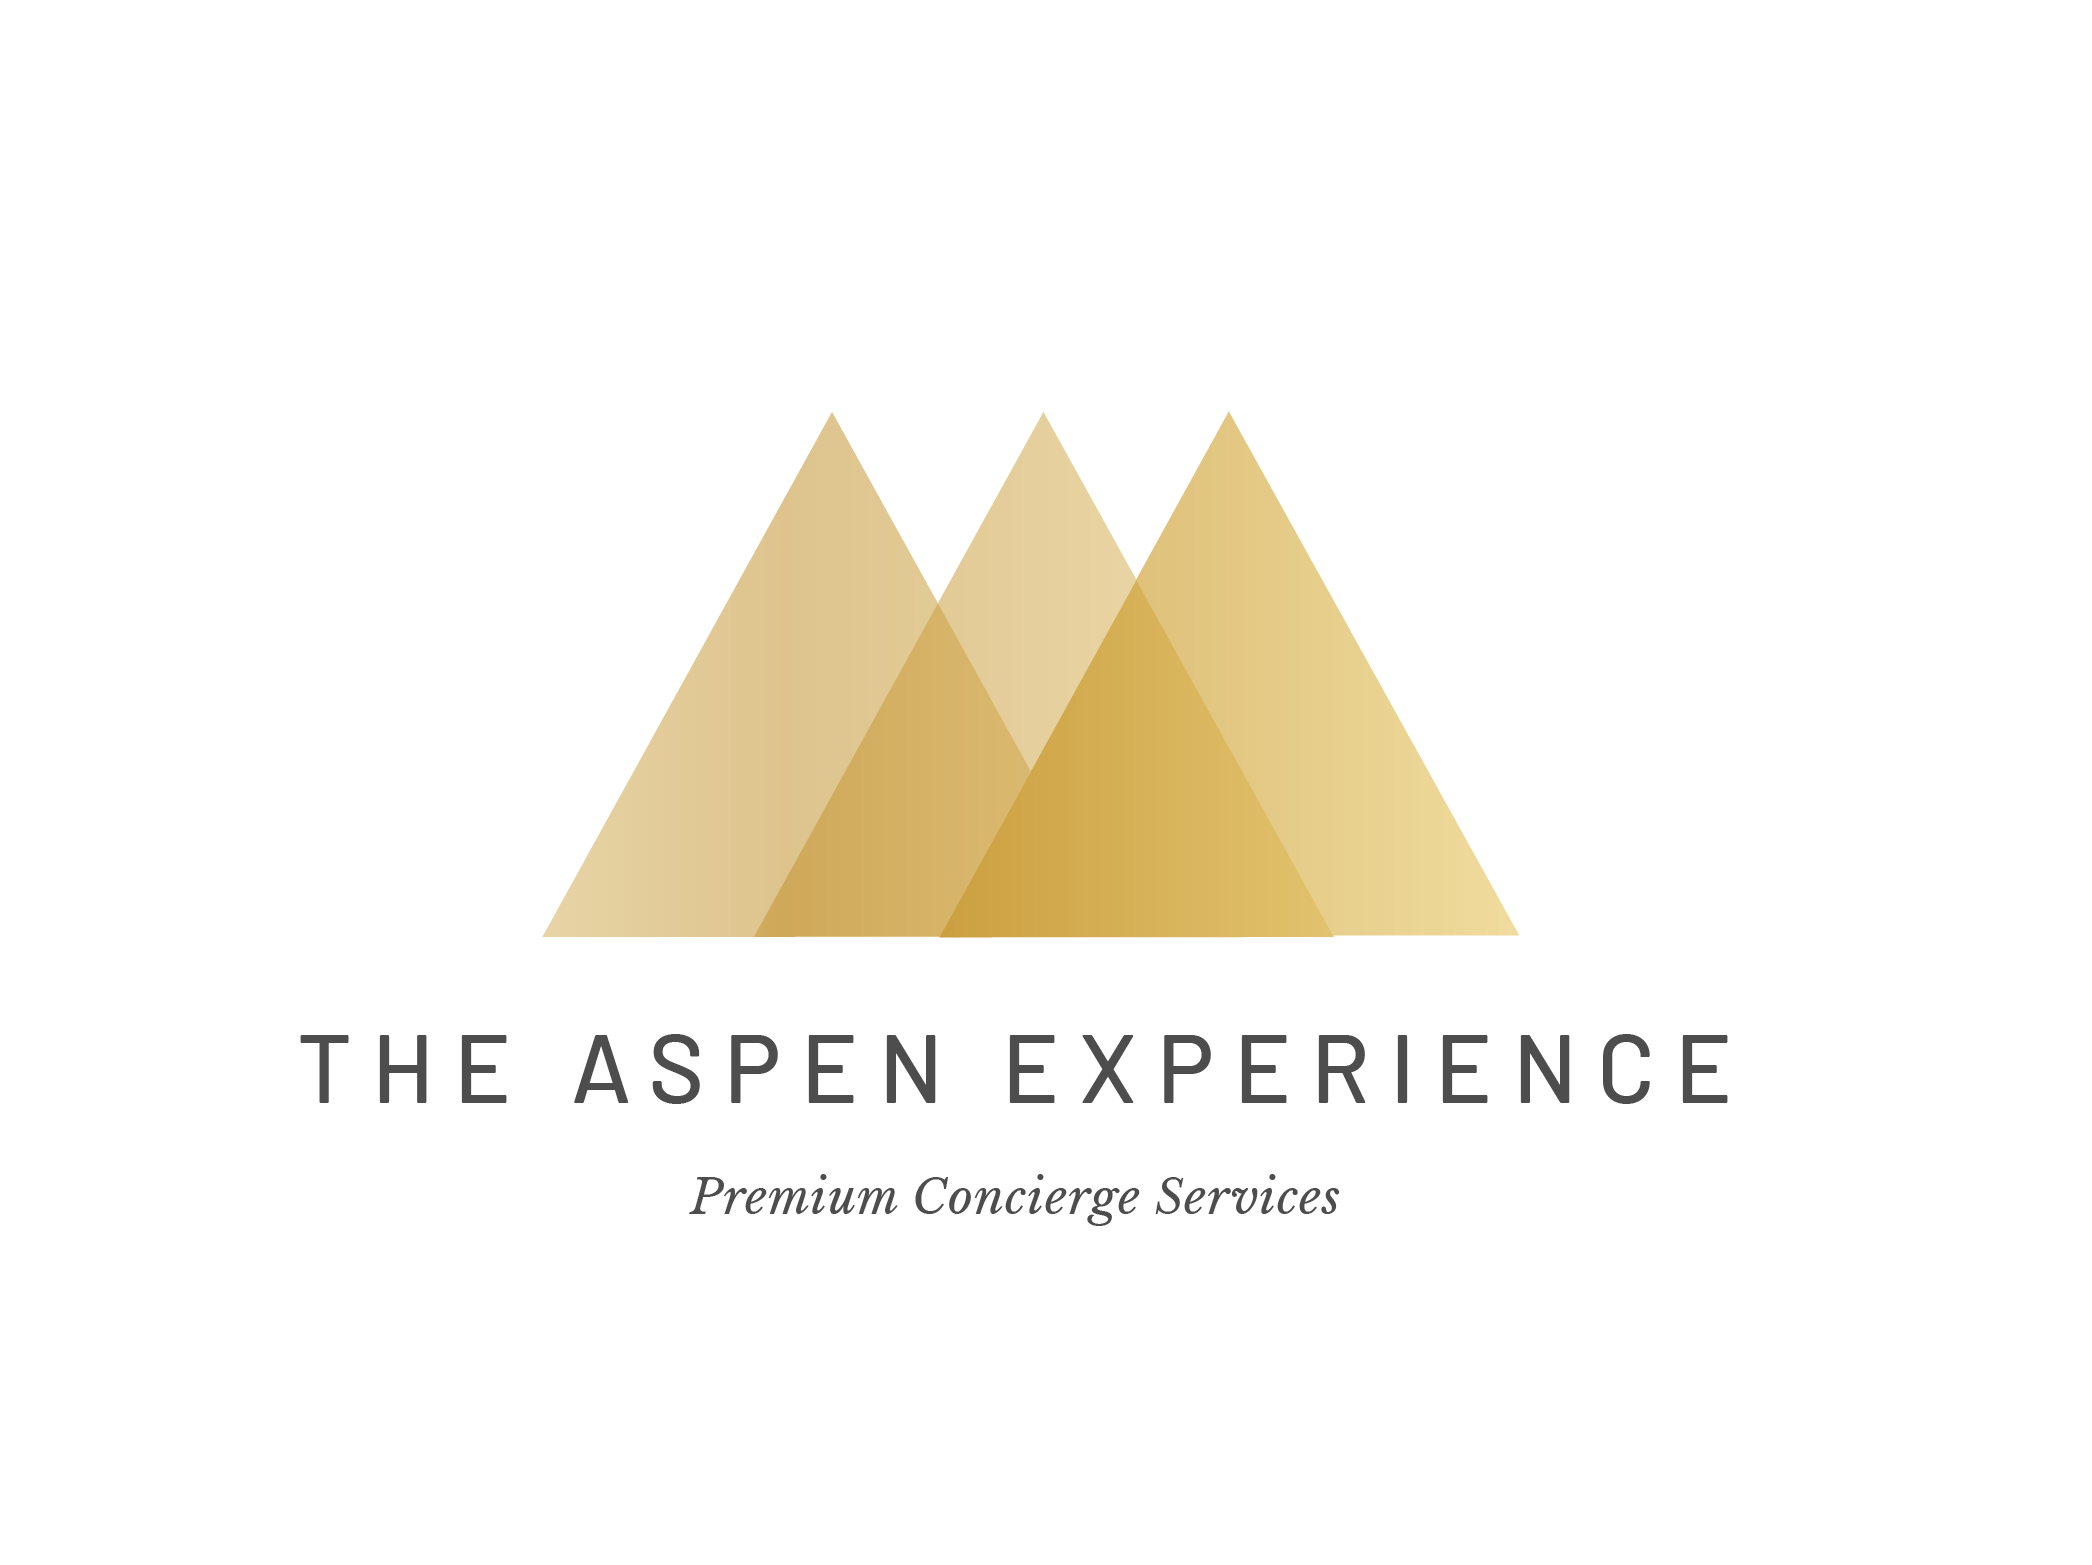 The Aspen Experience